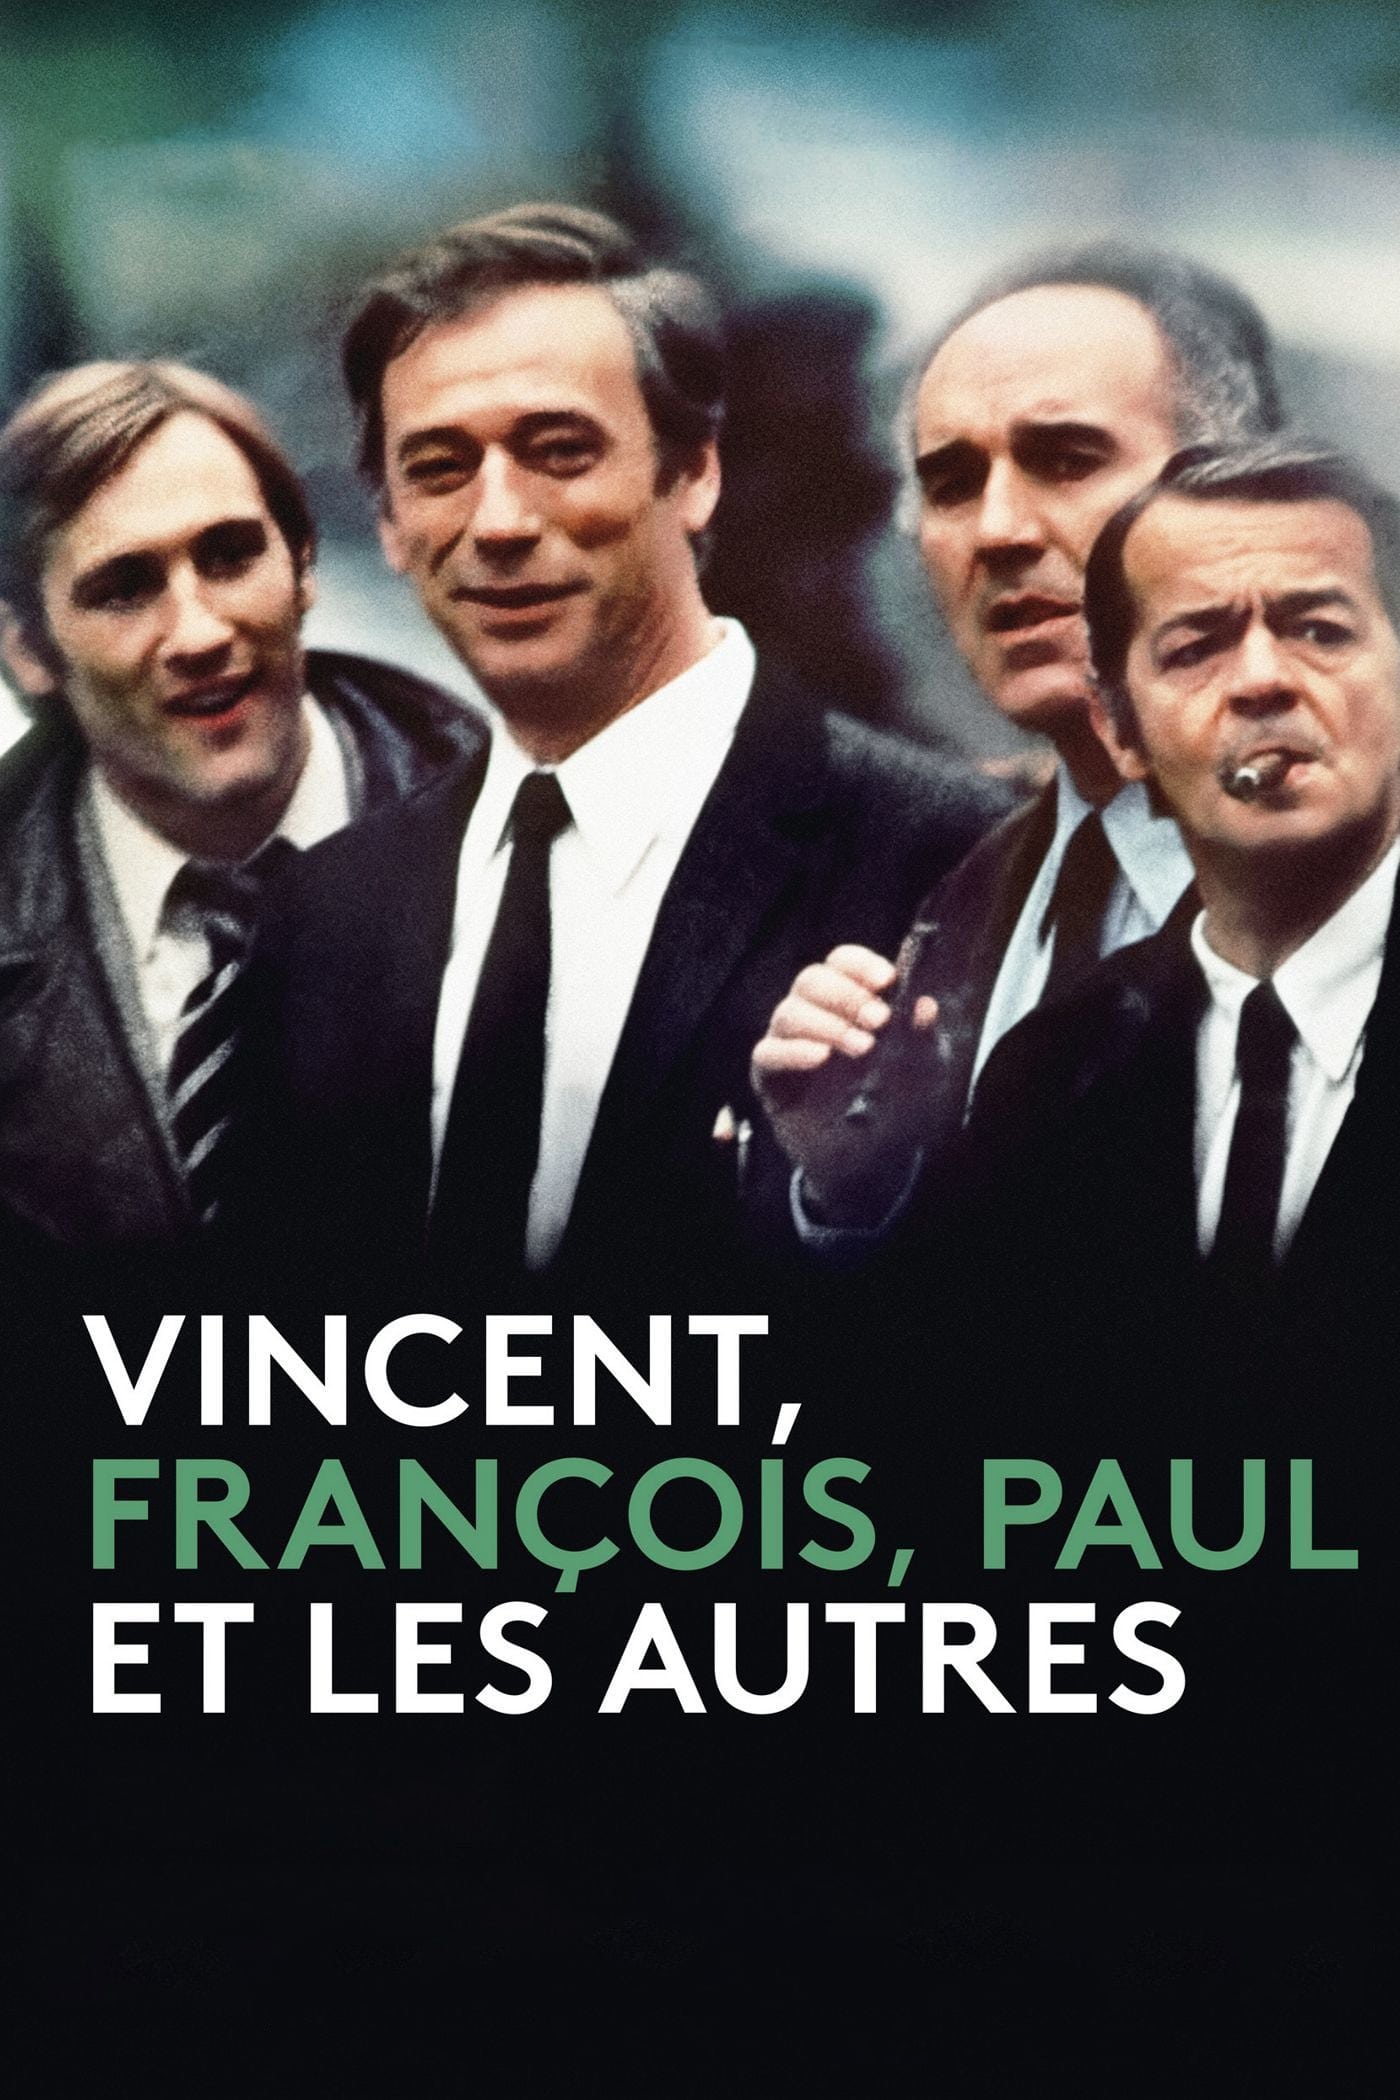 دانلود صوت دوبله فیلم Vincent, Francois, Paul and the Others